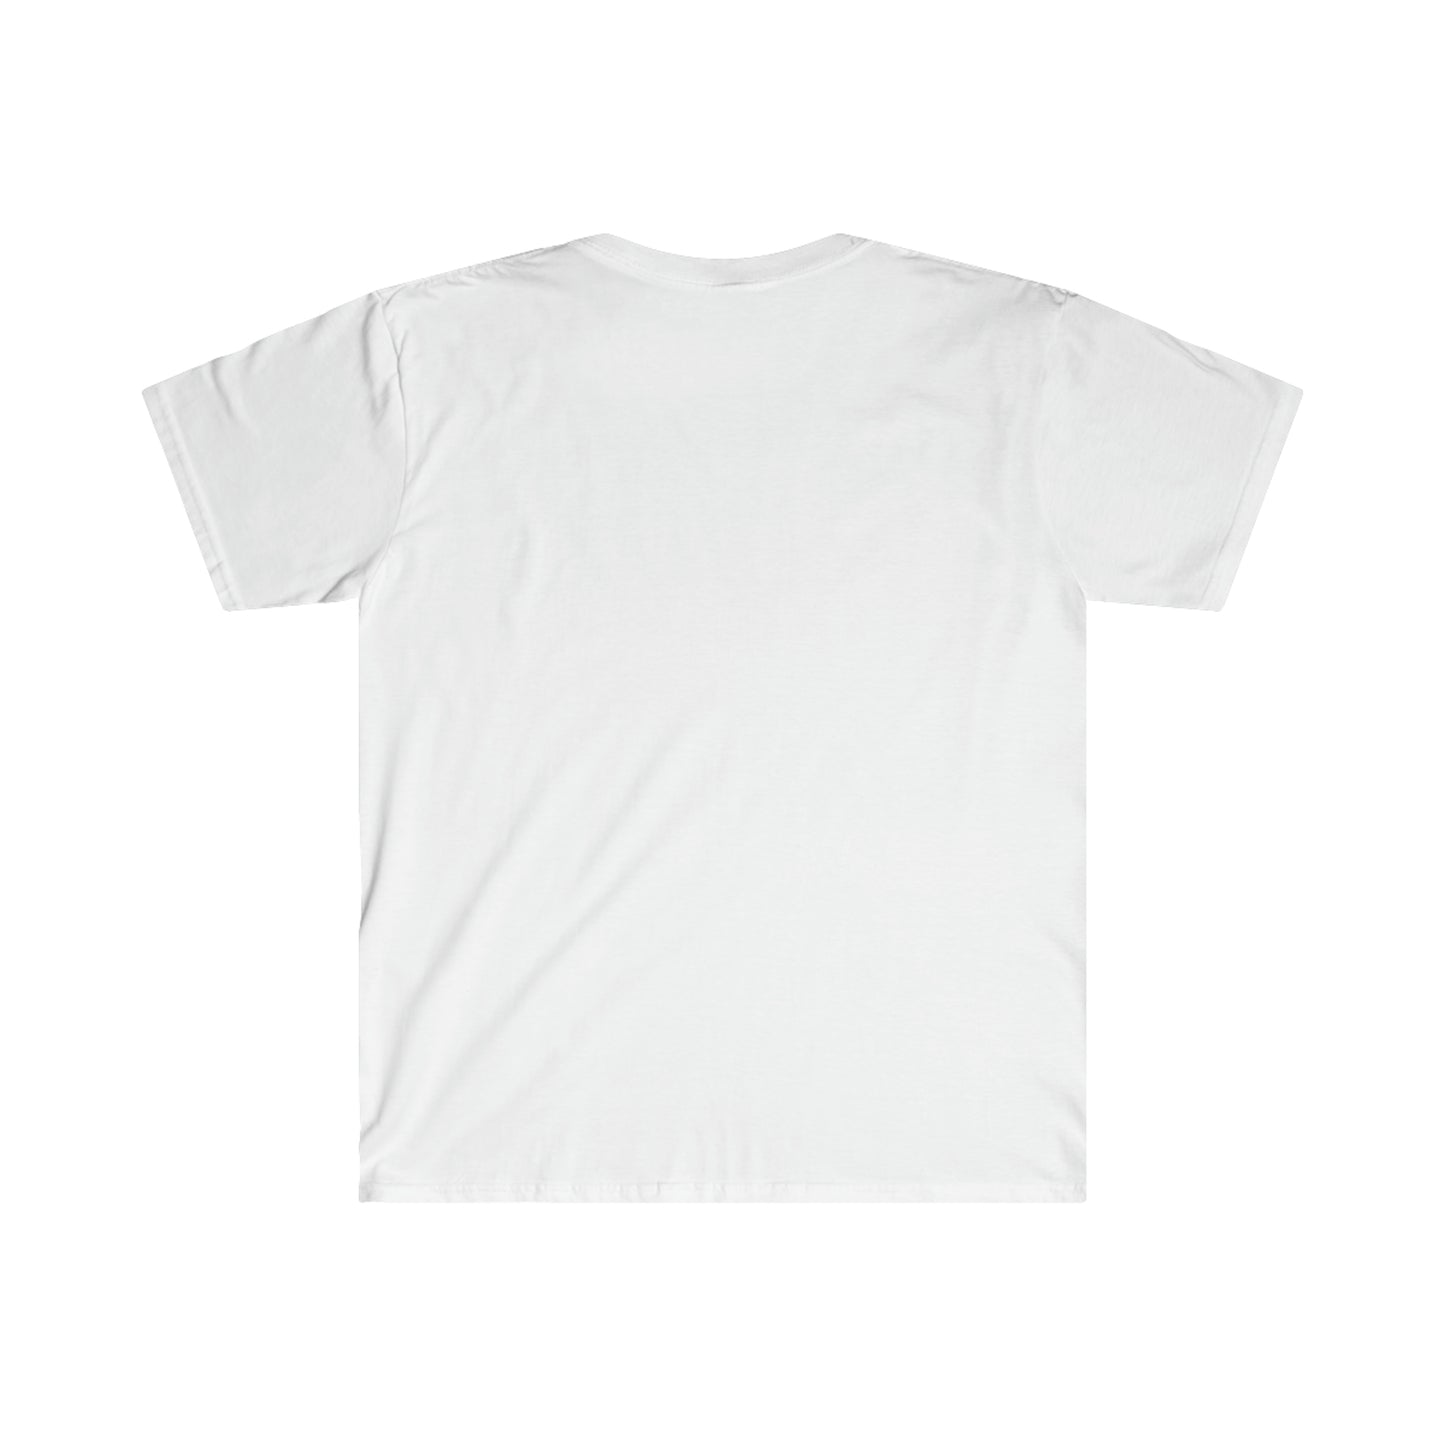 "Nothing Pursenale" Yorkie T-Shirt